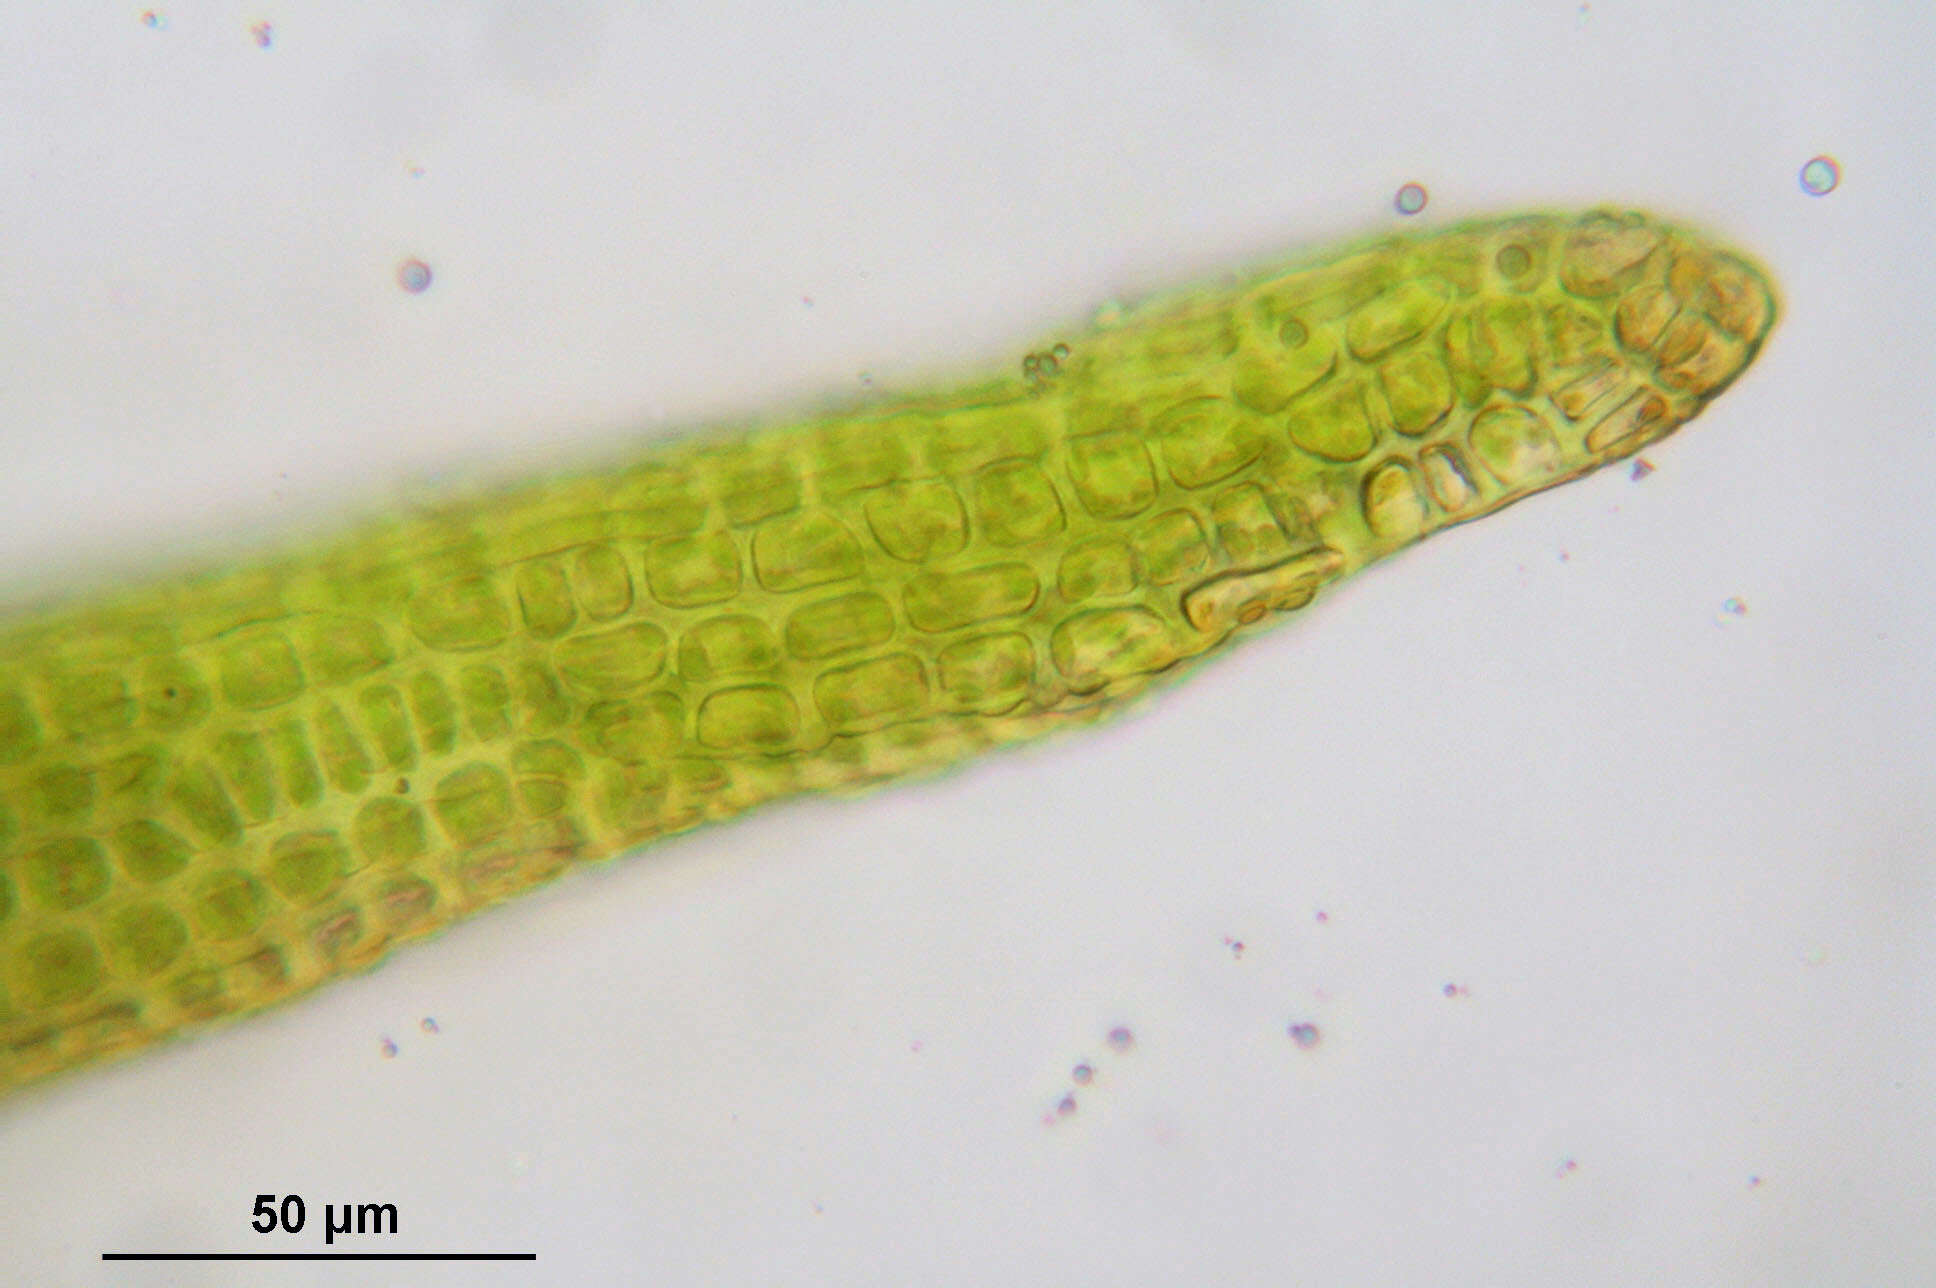 Image of dicranoweisia moss